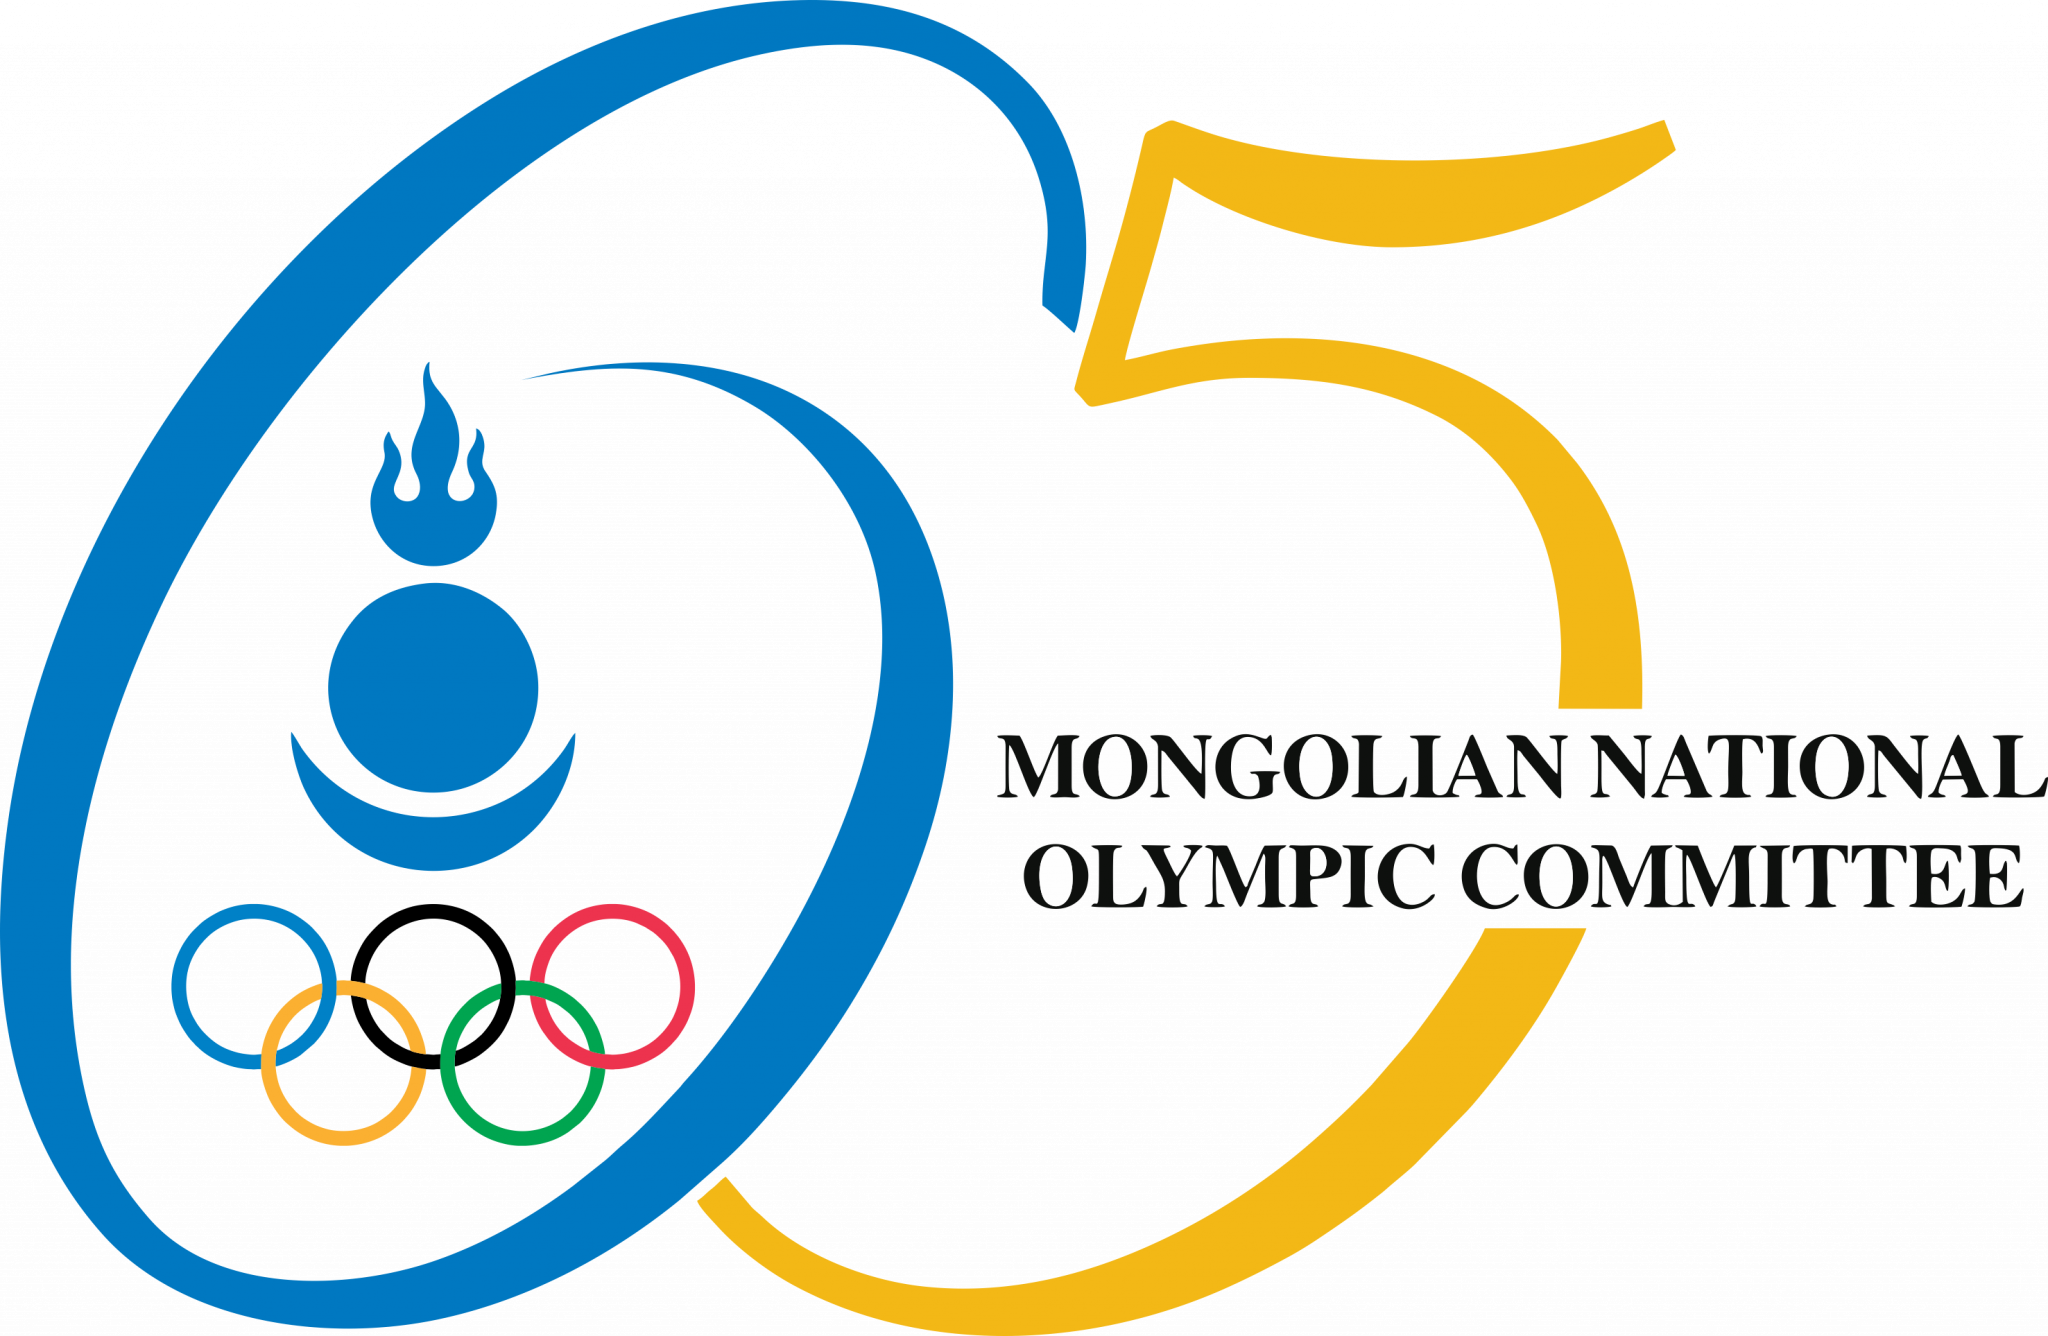 Mongolia NOC unveil new logo to mark 65-year anniversary